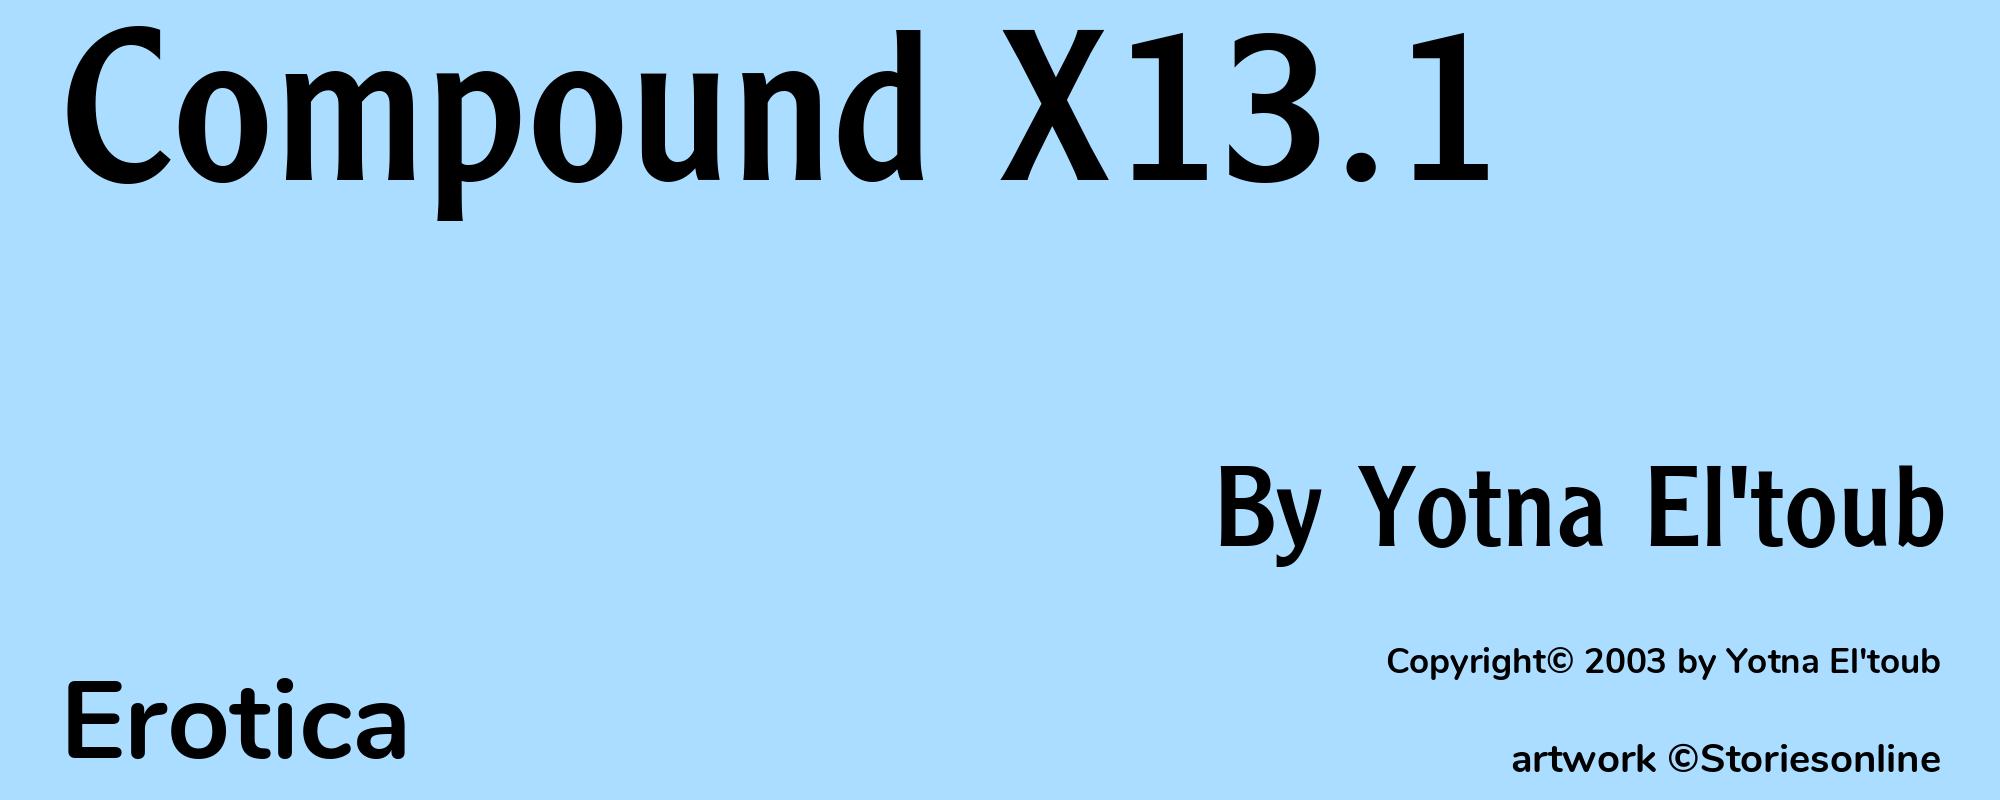 Compound X13.1 - Cover